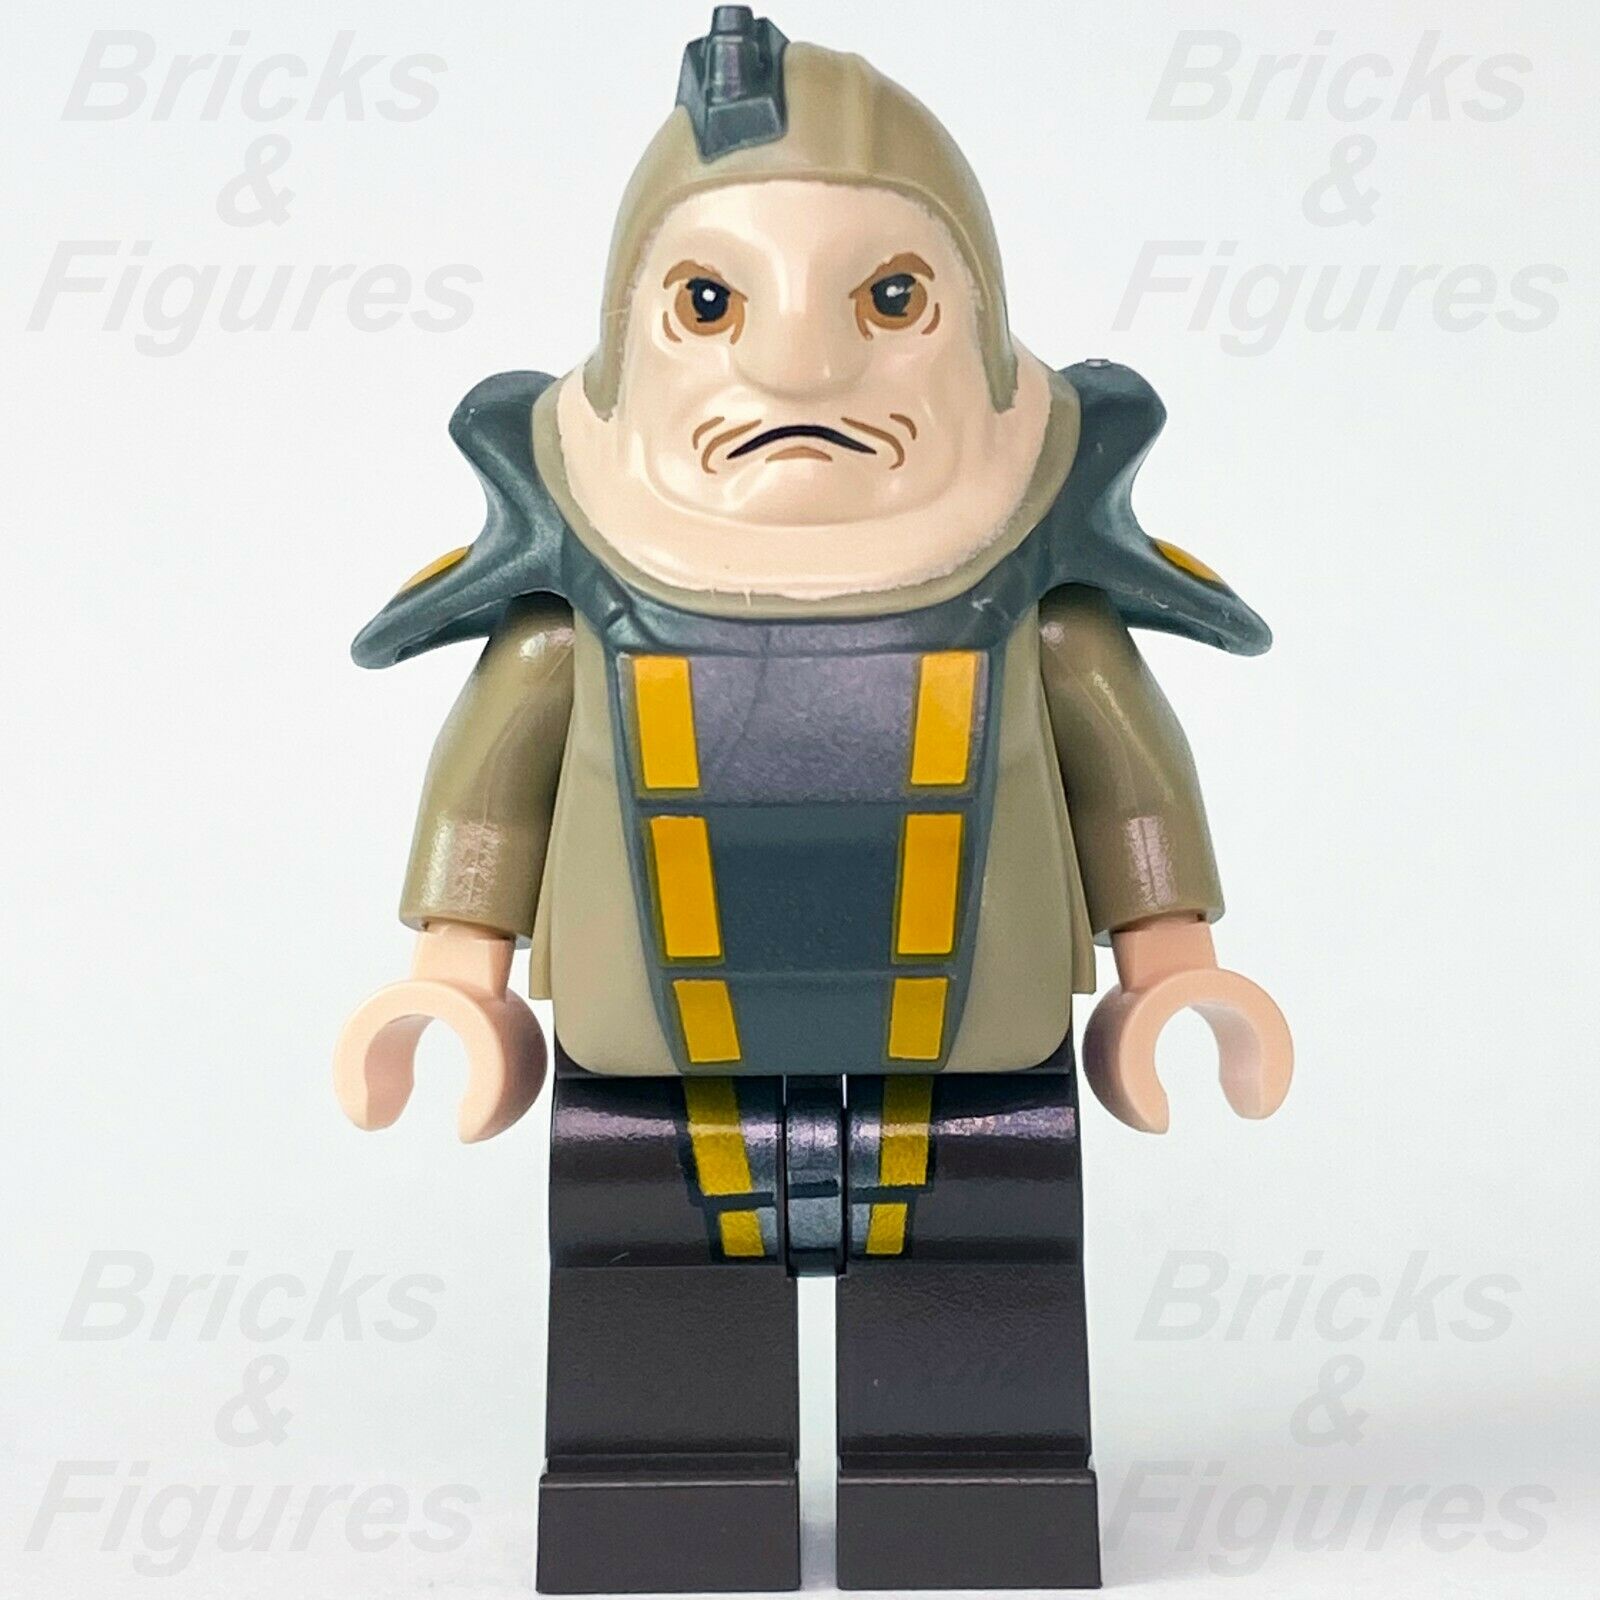 New Star Wars LEGO Unkar Plutt "Blobfish" The Force Awakens Minifigure 75148 - Bricks & Figures